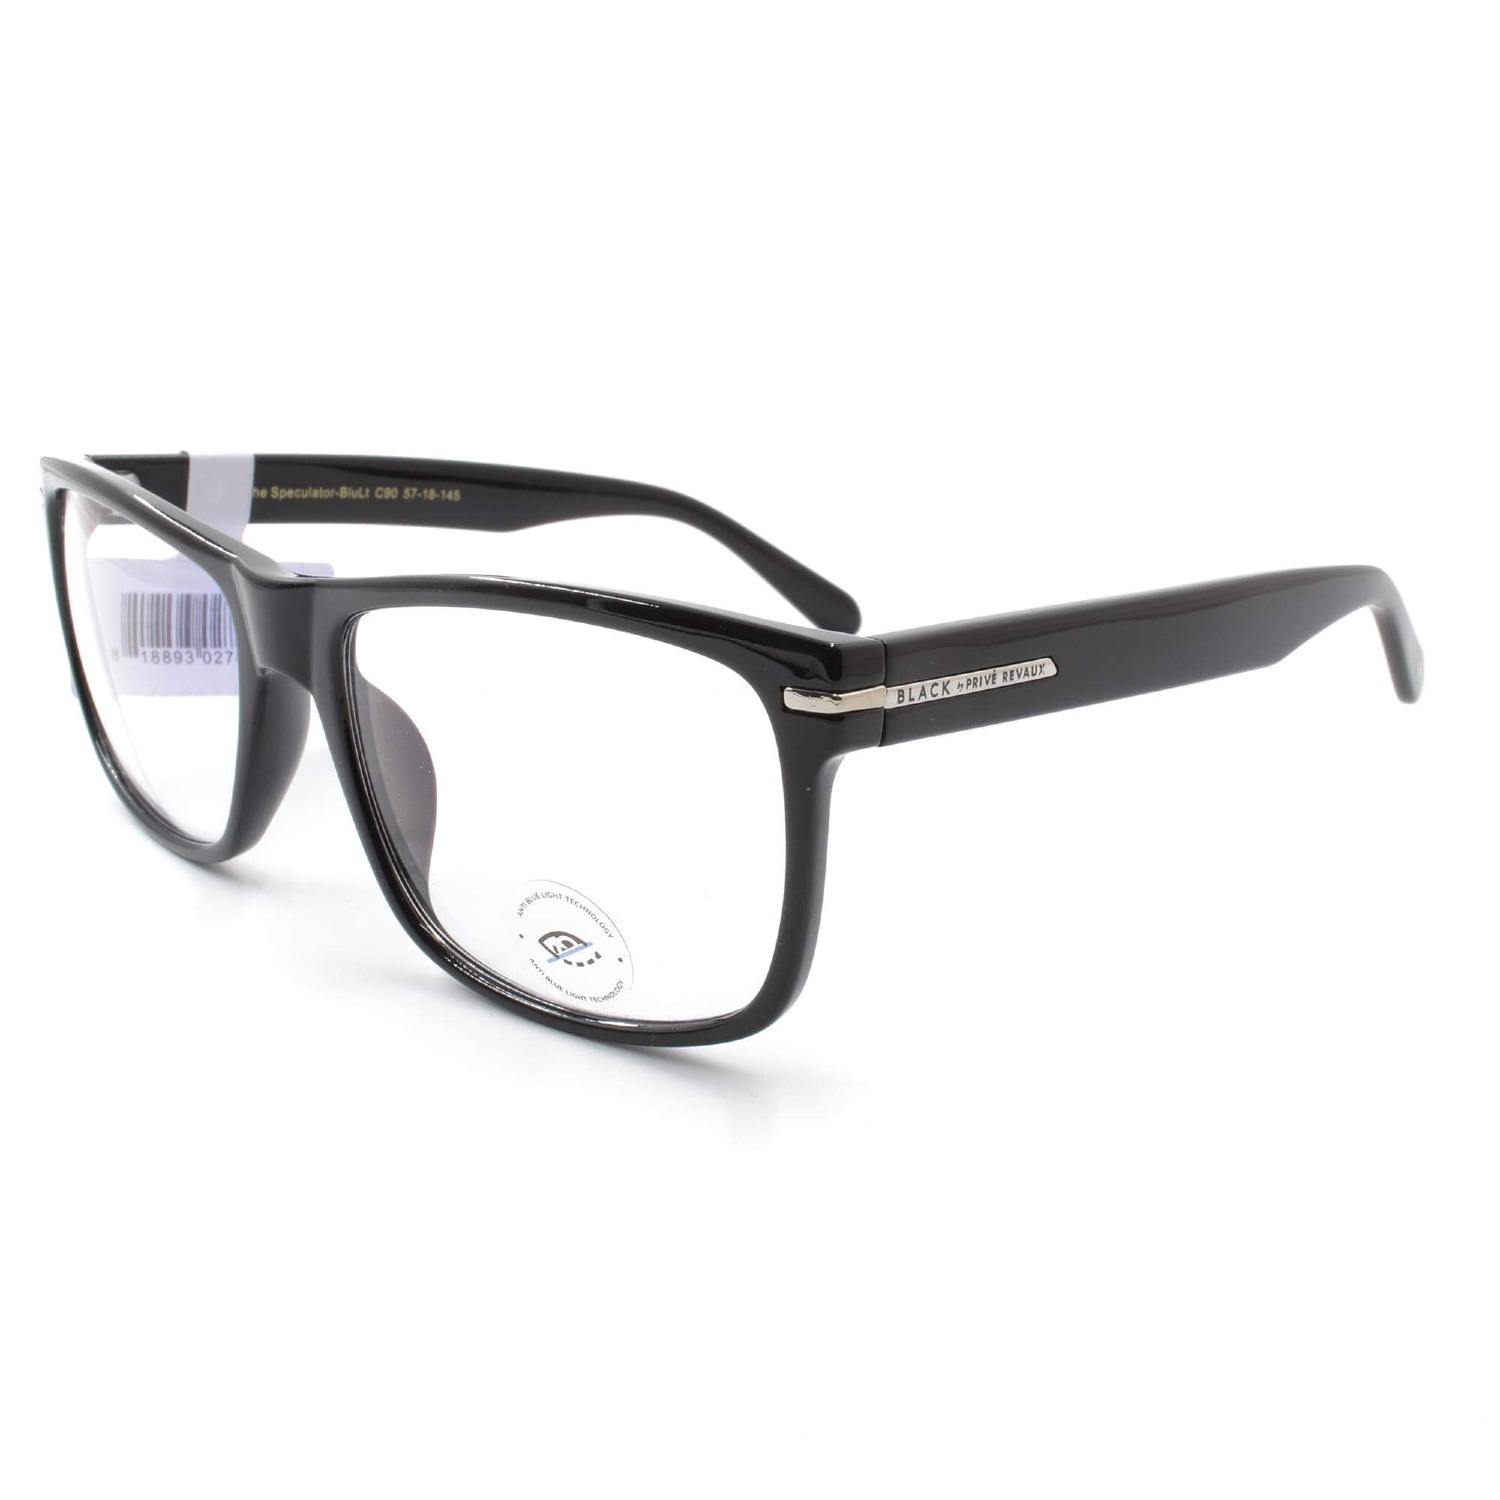 Prive Revaux Eyeglasses and Blue Light Eyeglasses (8 styles) $8.99 + Free Shipping